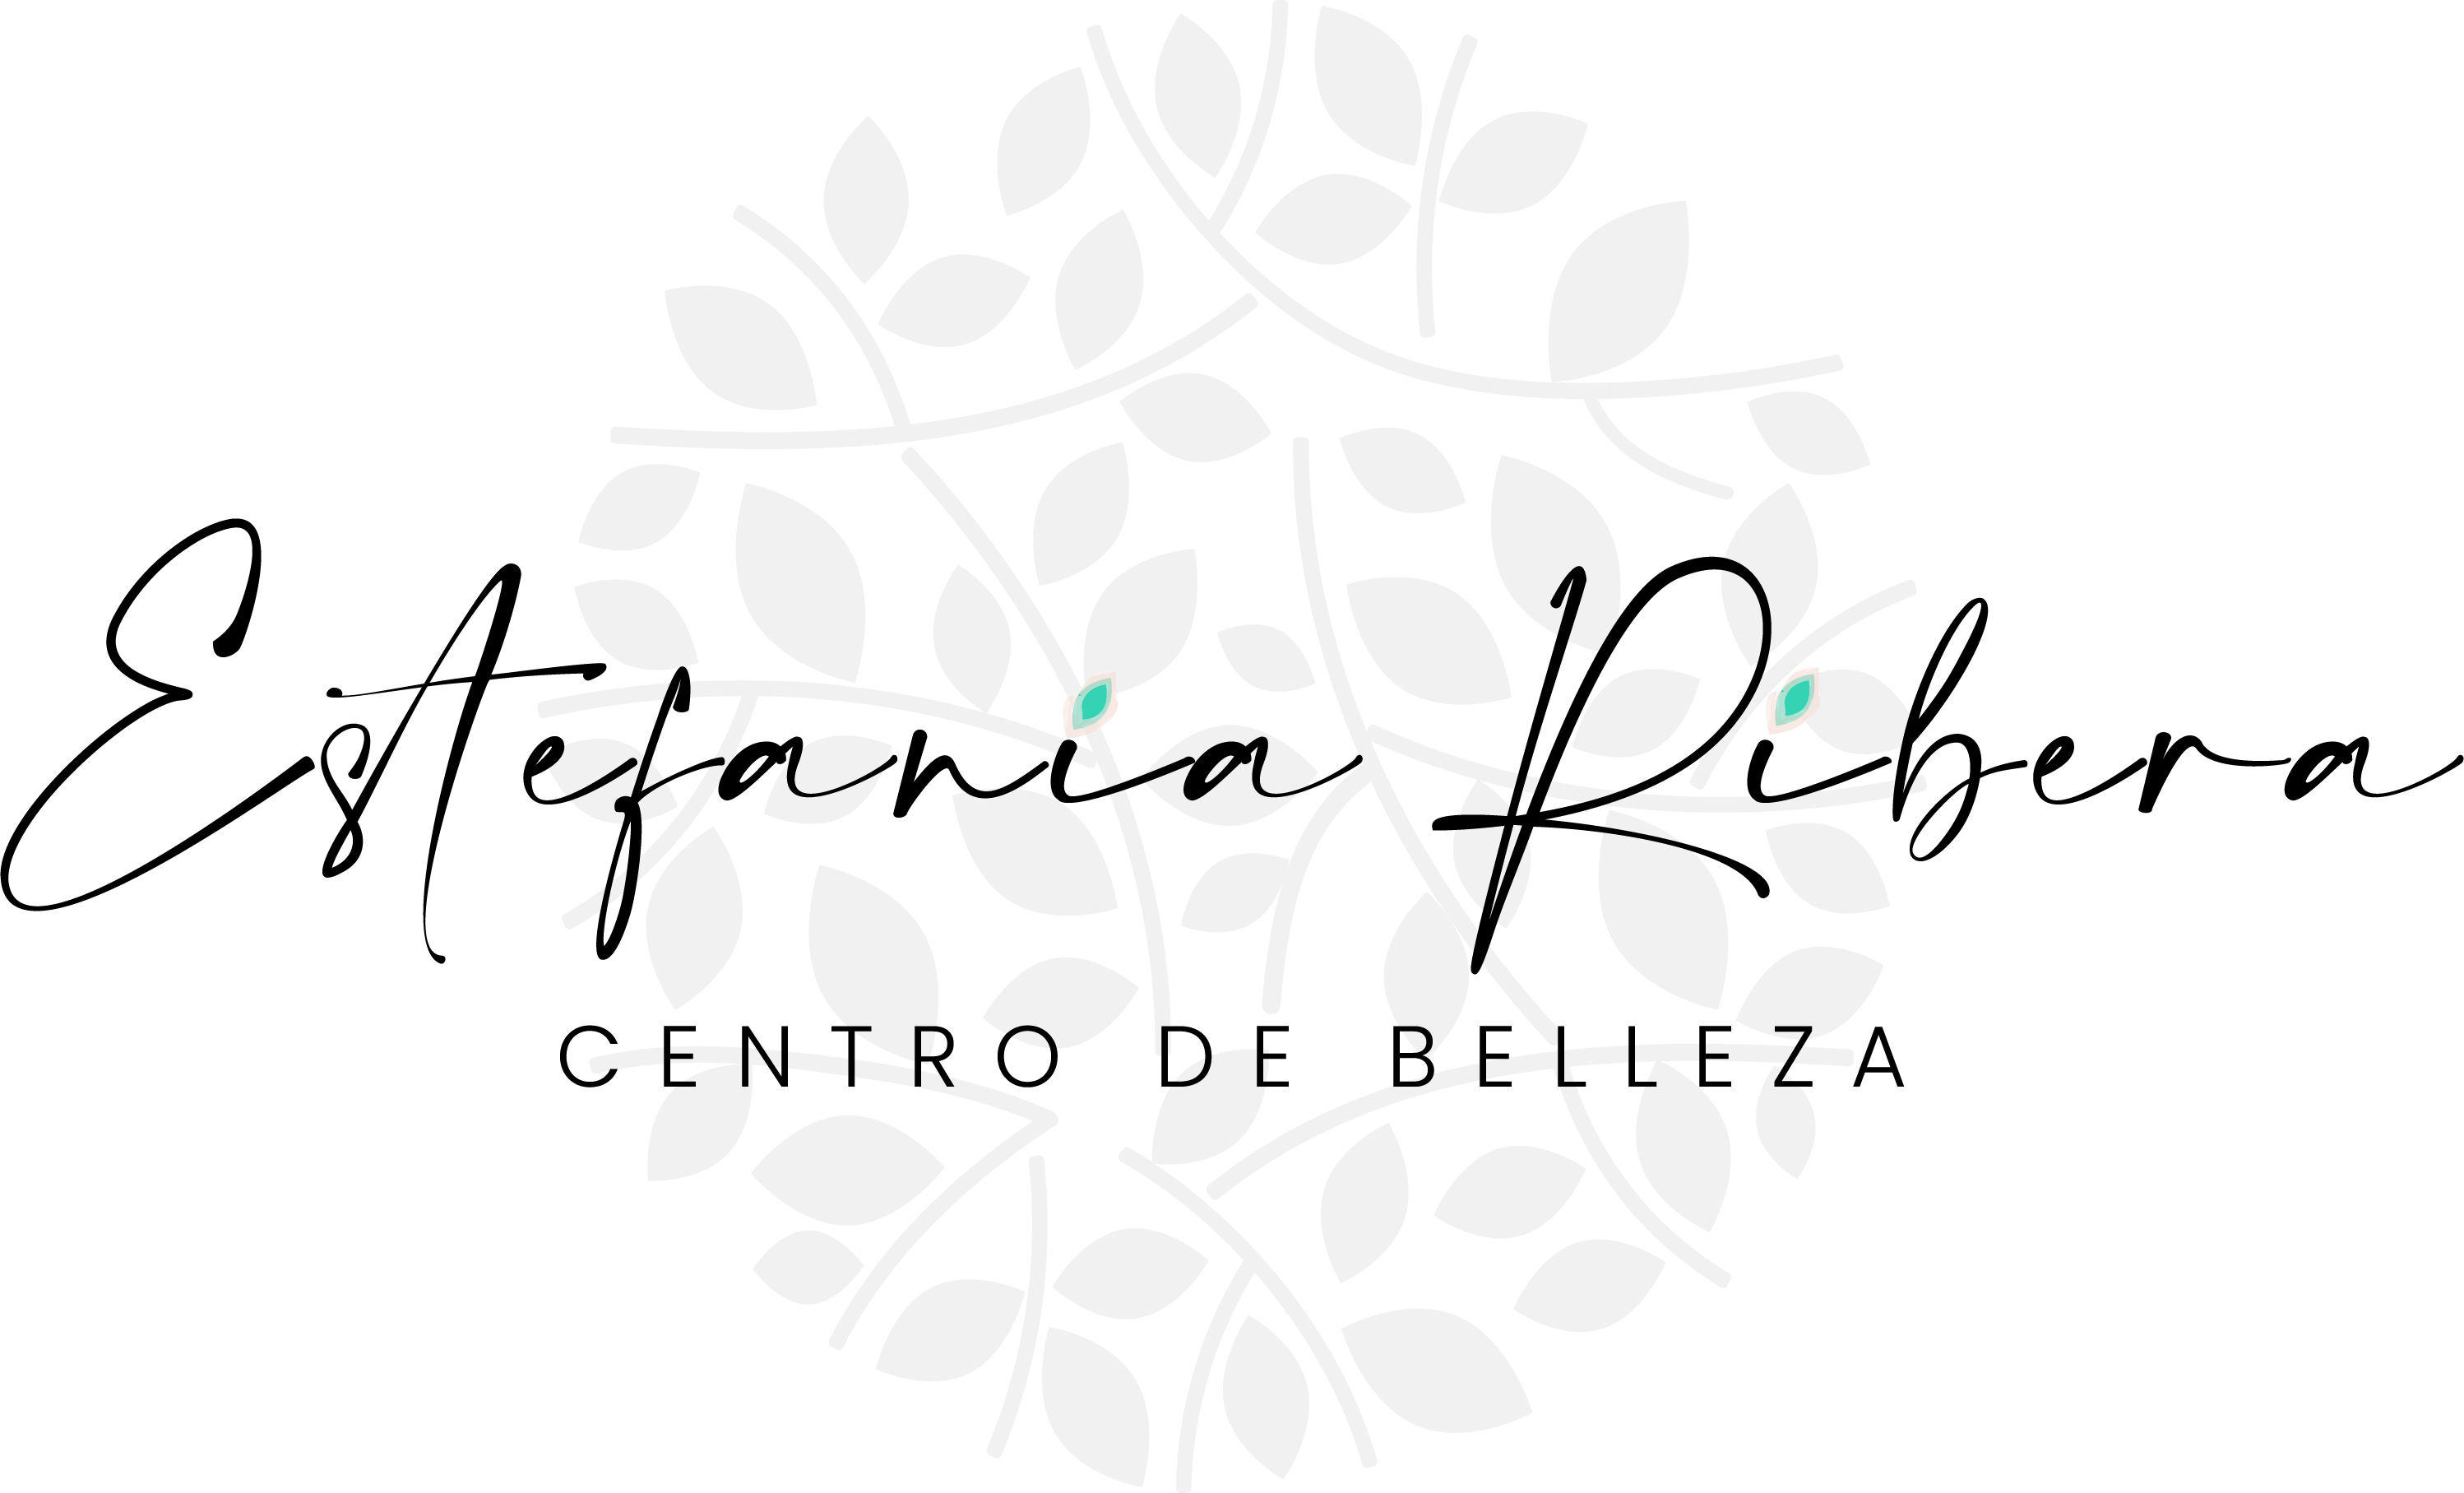 Logotipo PNG - Para blancosxxhdpi